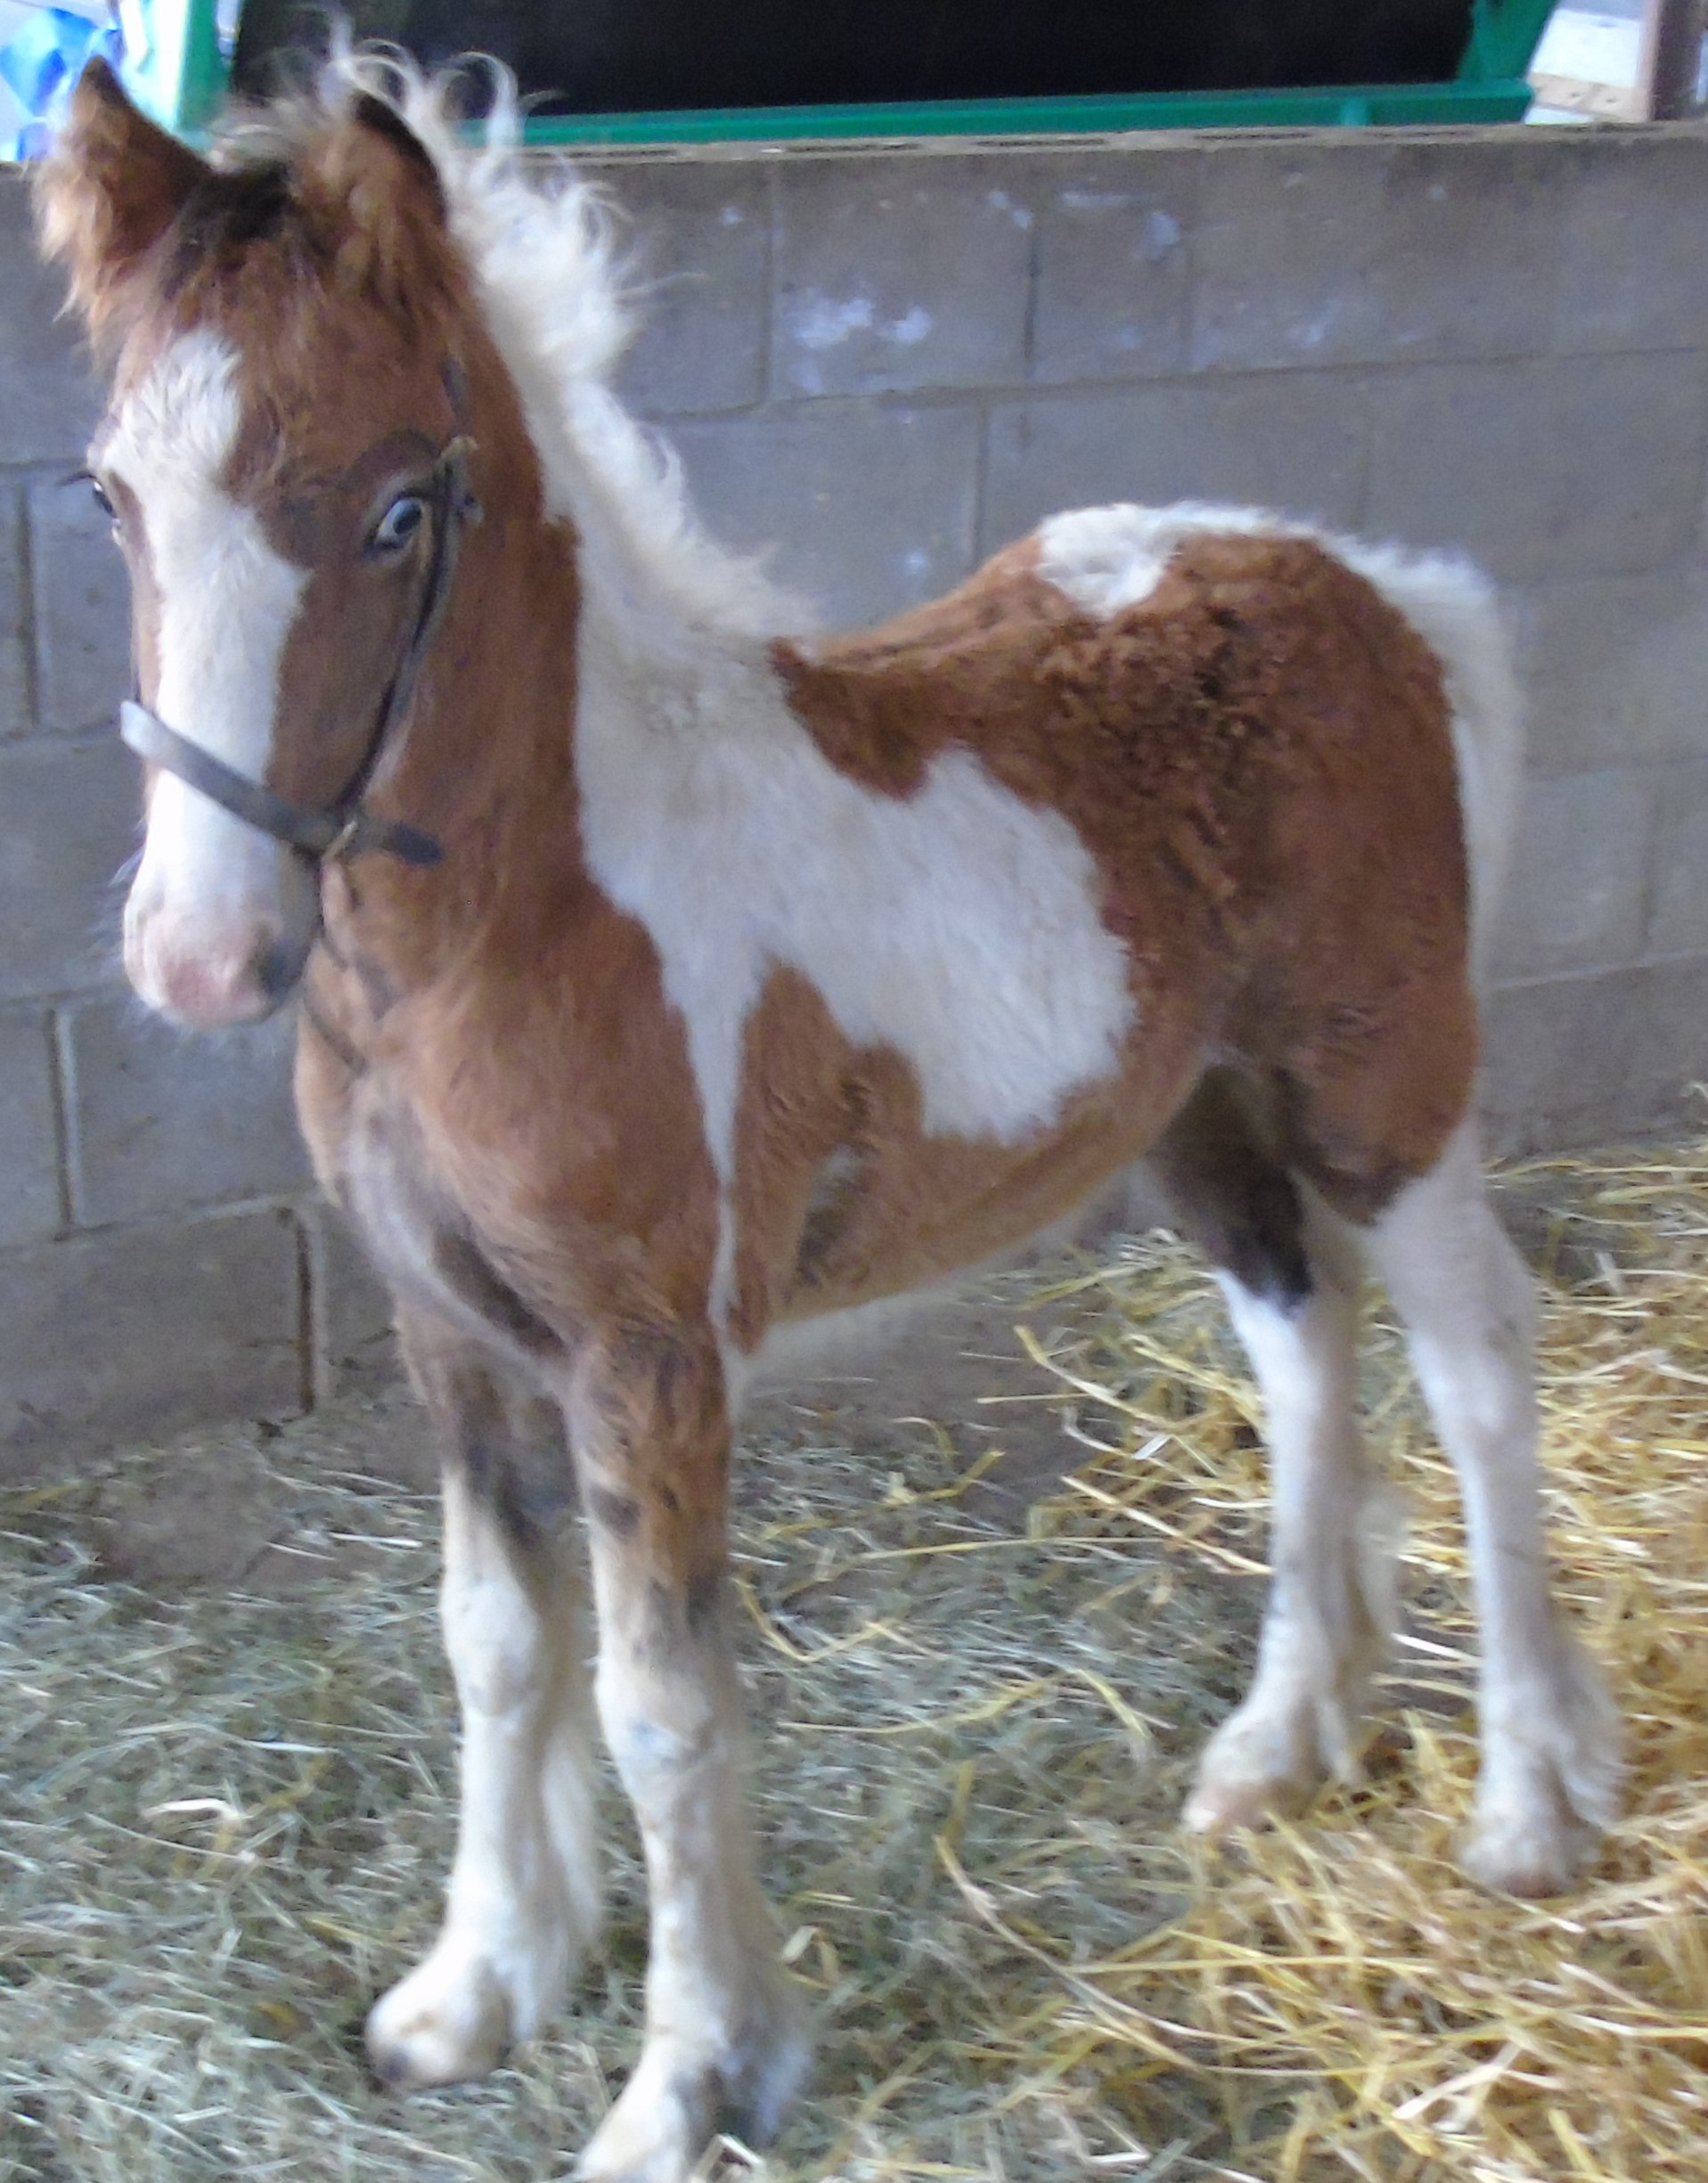 Six week old abandoned foal